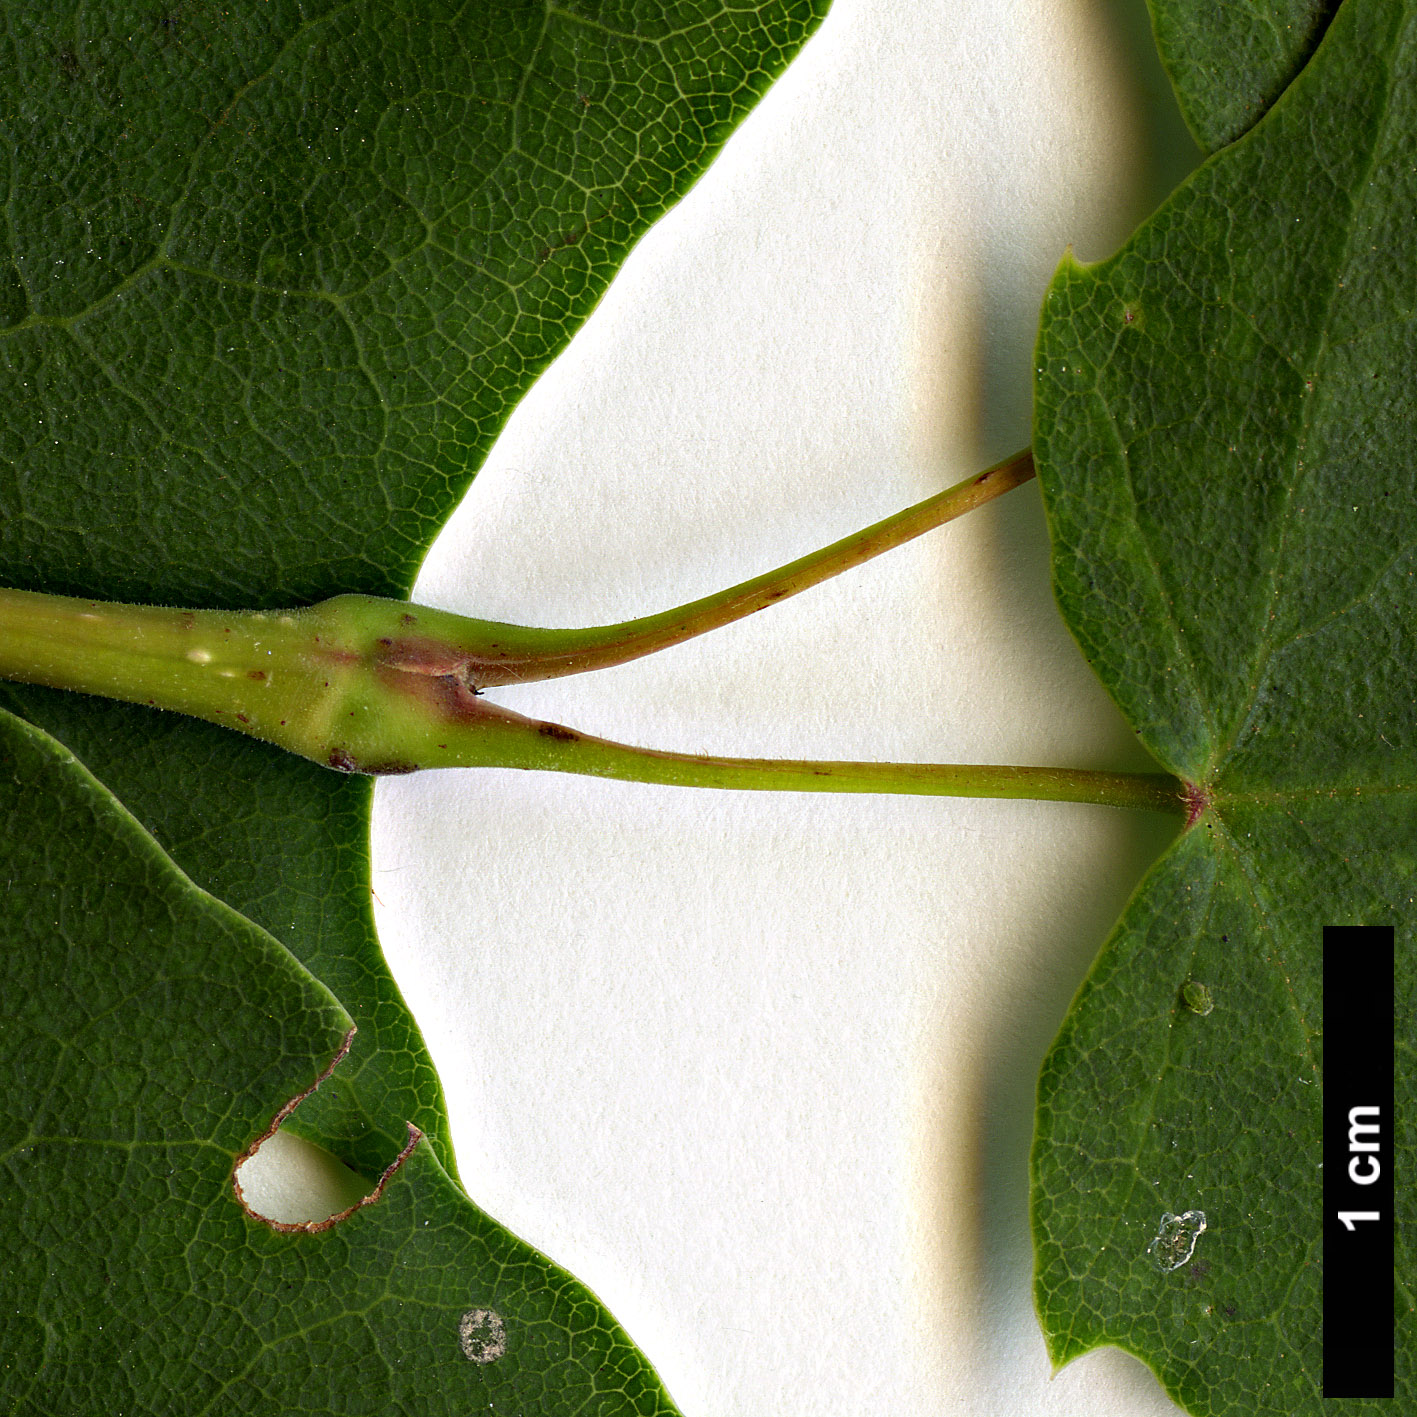 High resolution image: Family: Sapindaceae - Genus: Acer - Taxon: tenellum